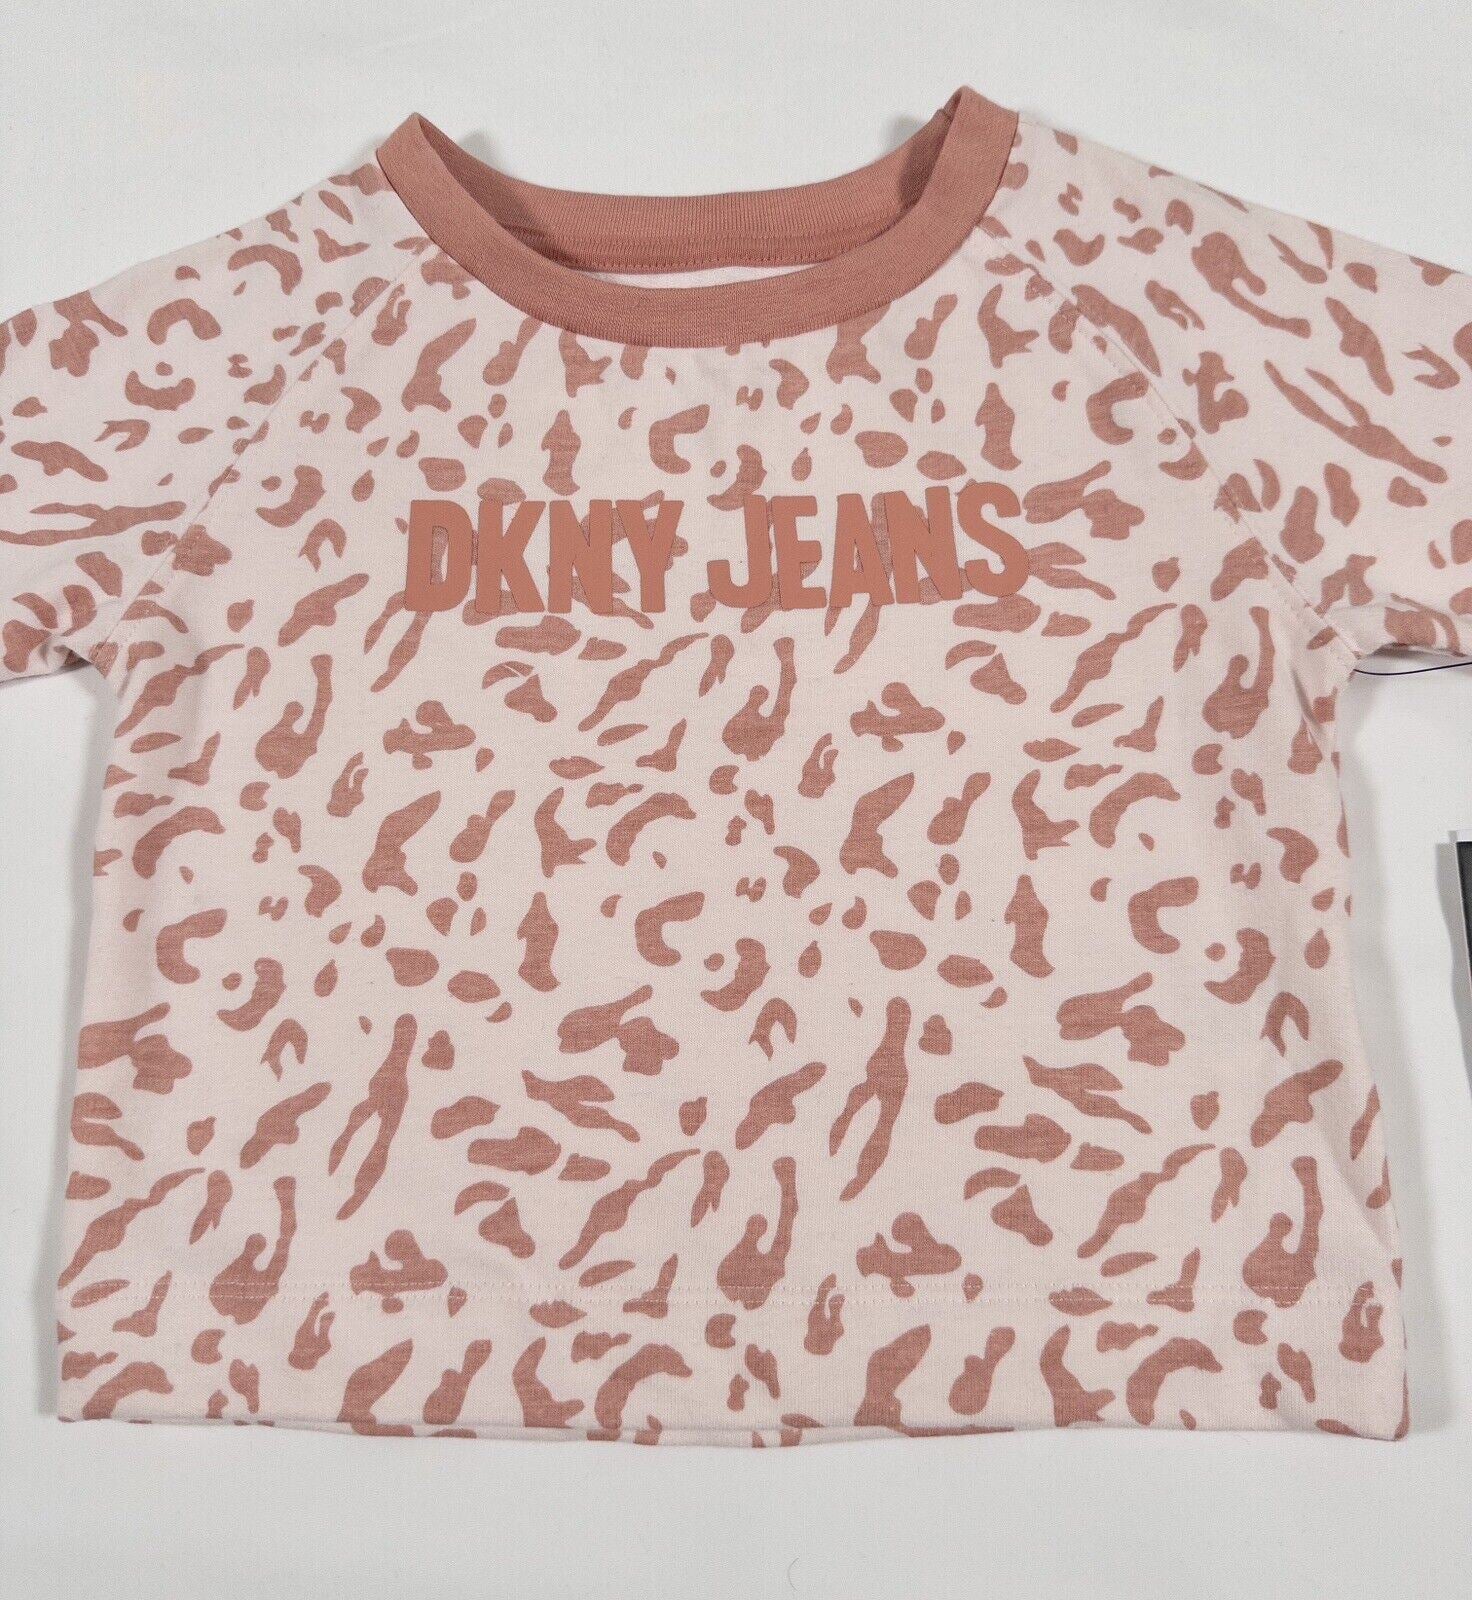 DKNY JEANS Kids Girls Jumper Top Long Sleeve Animal Print Size UK 18 Months Pink